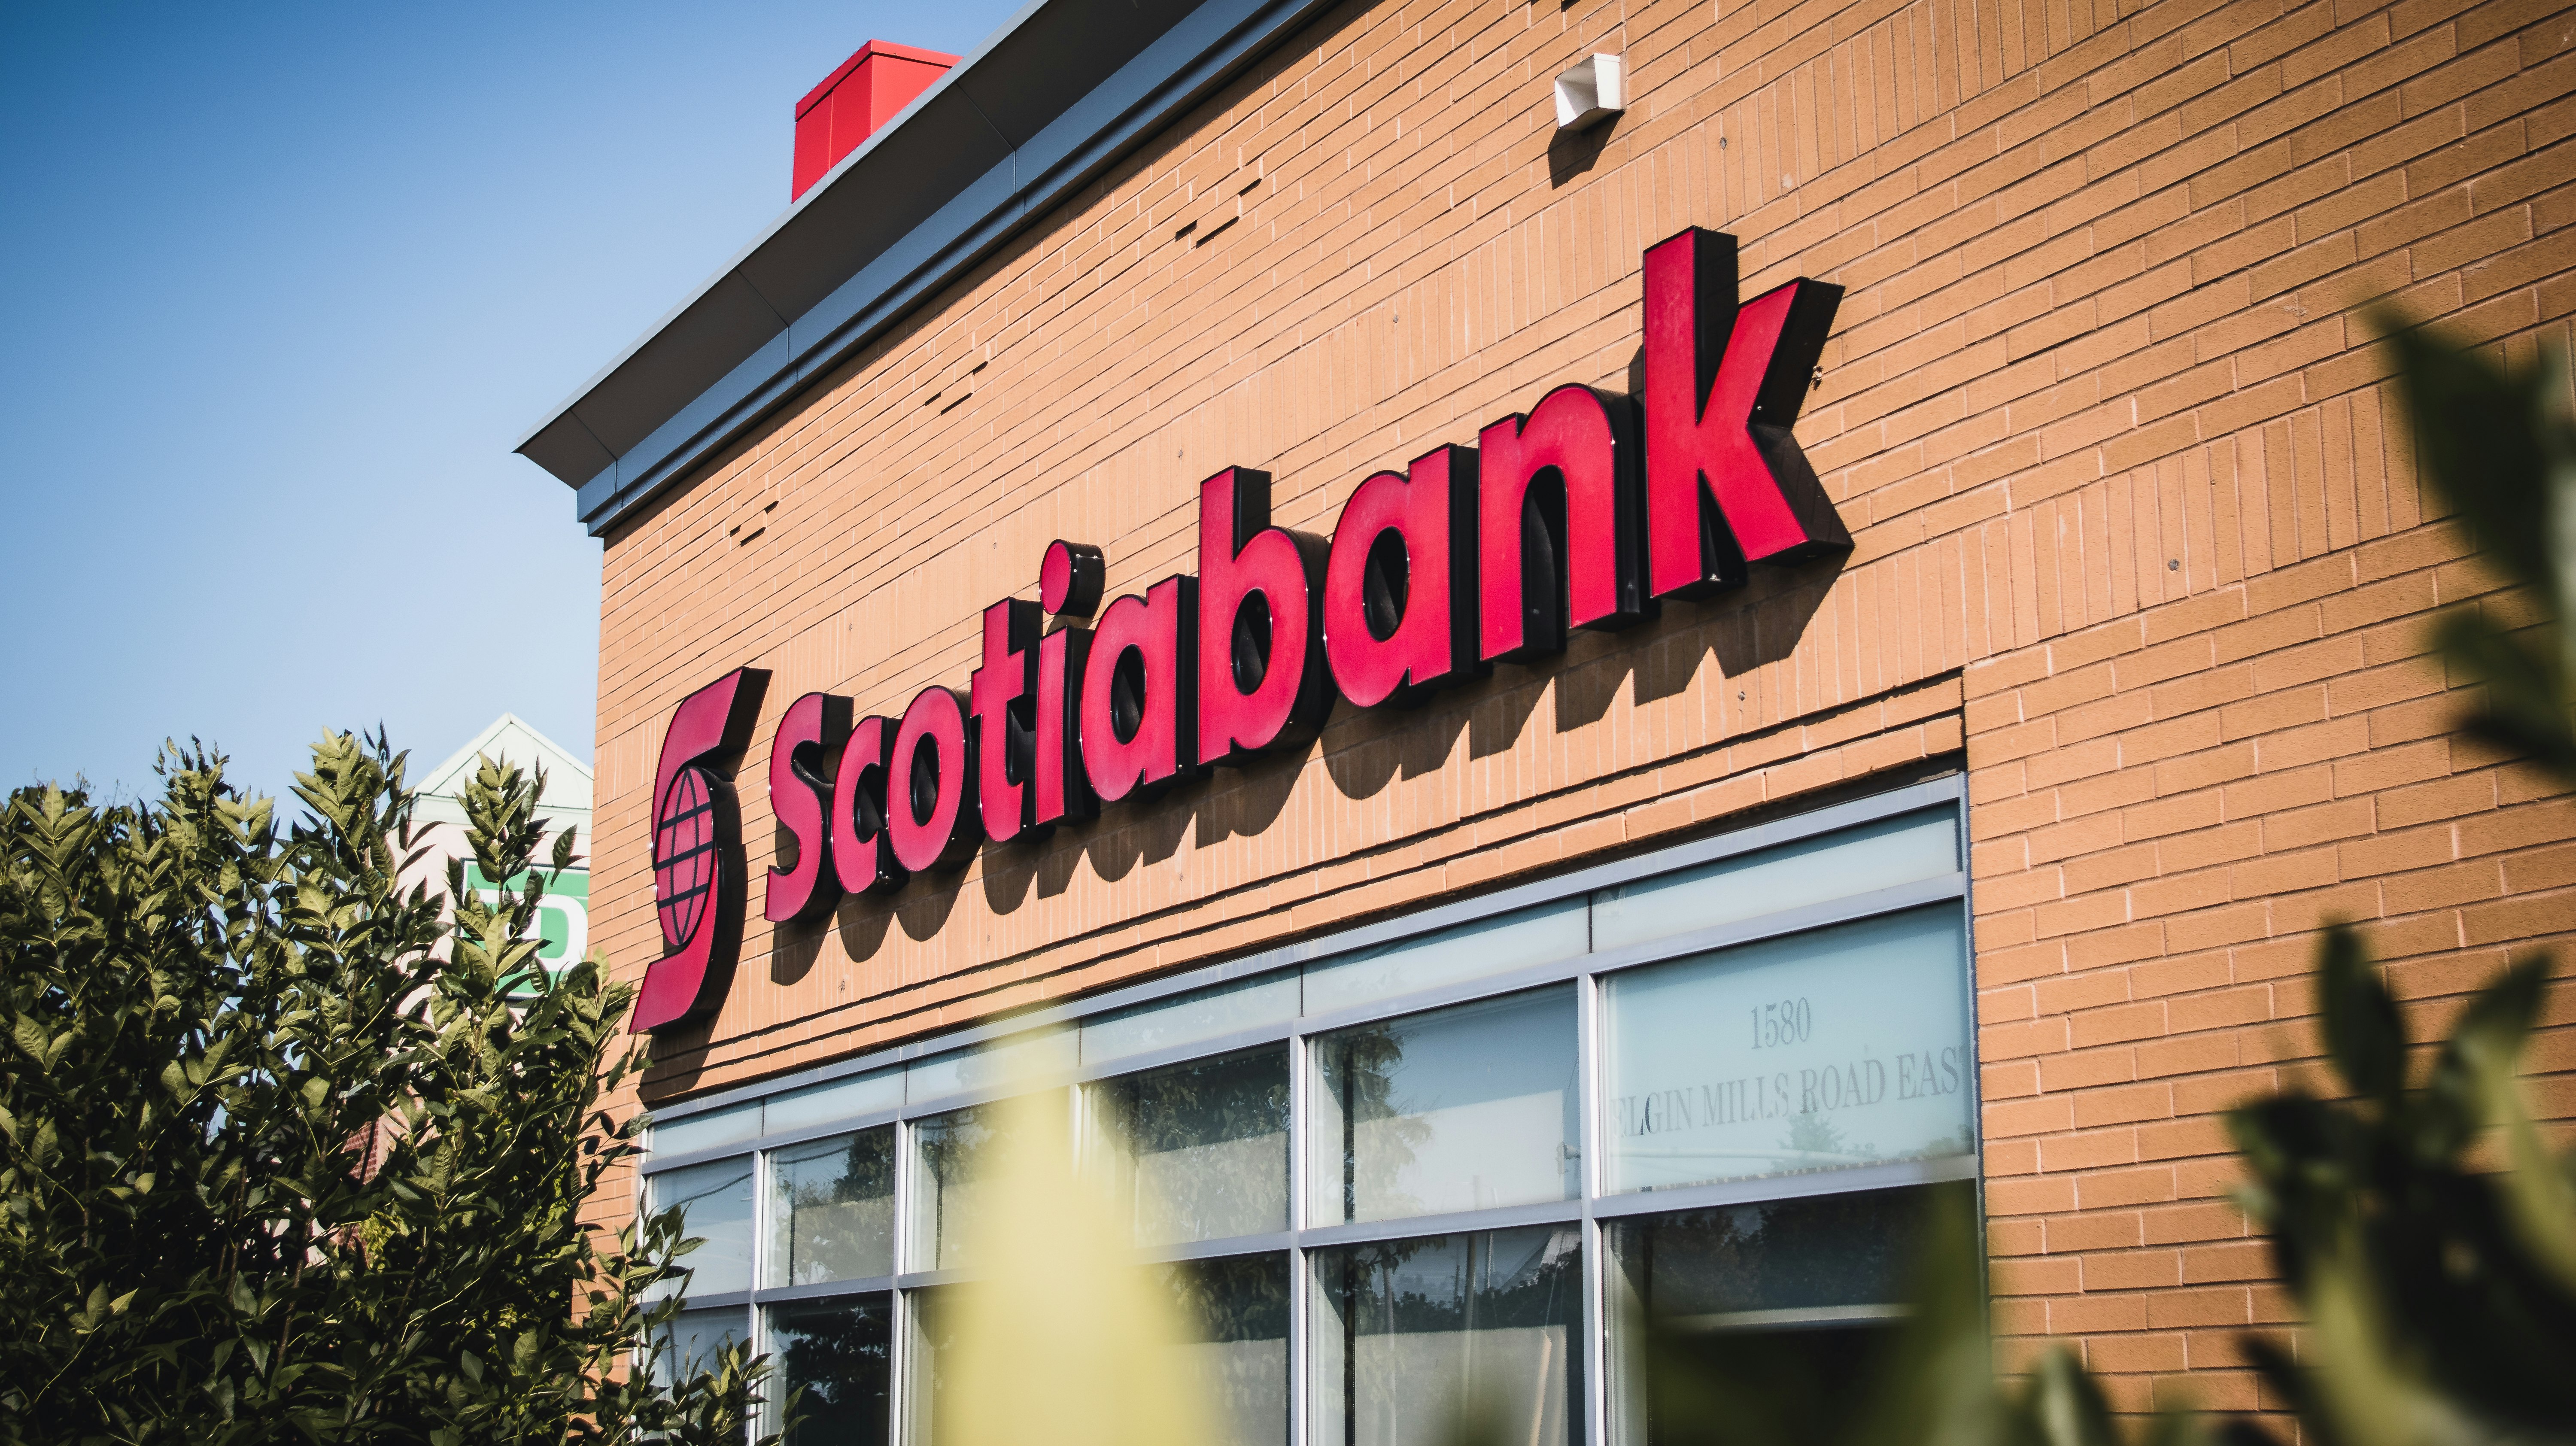 Scotiabank Retail Location